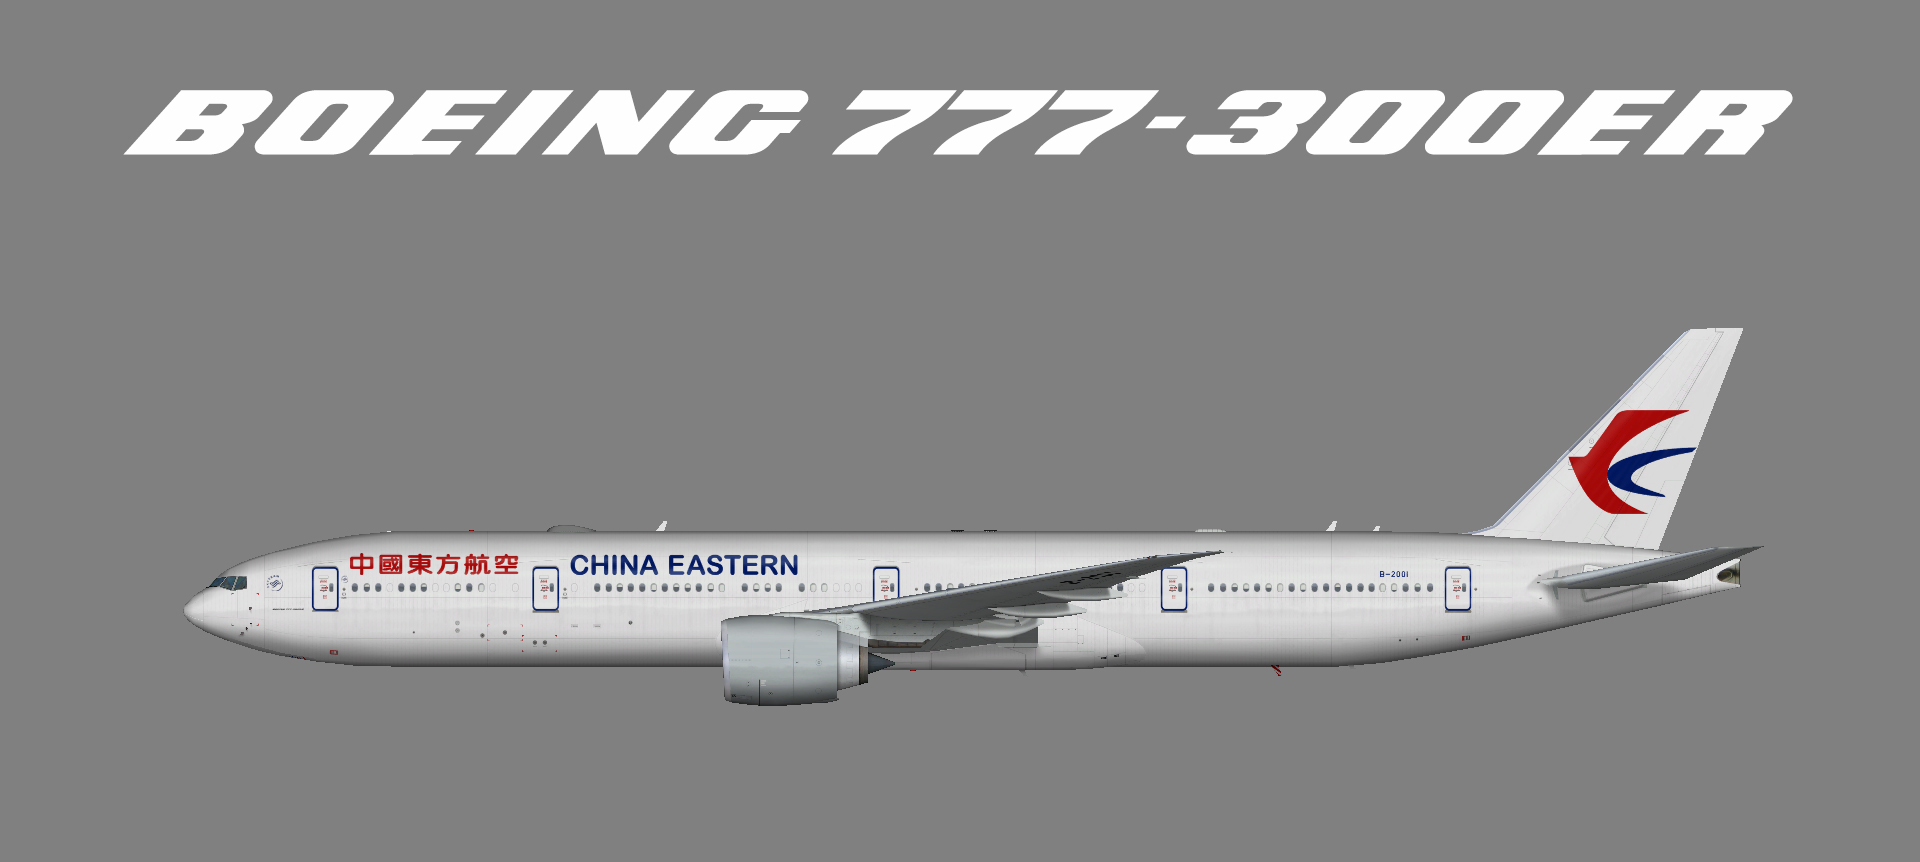 China Eastern Boeing 777-300ER (FSP)